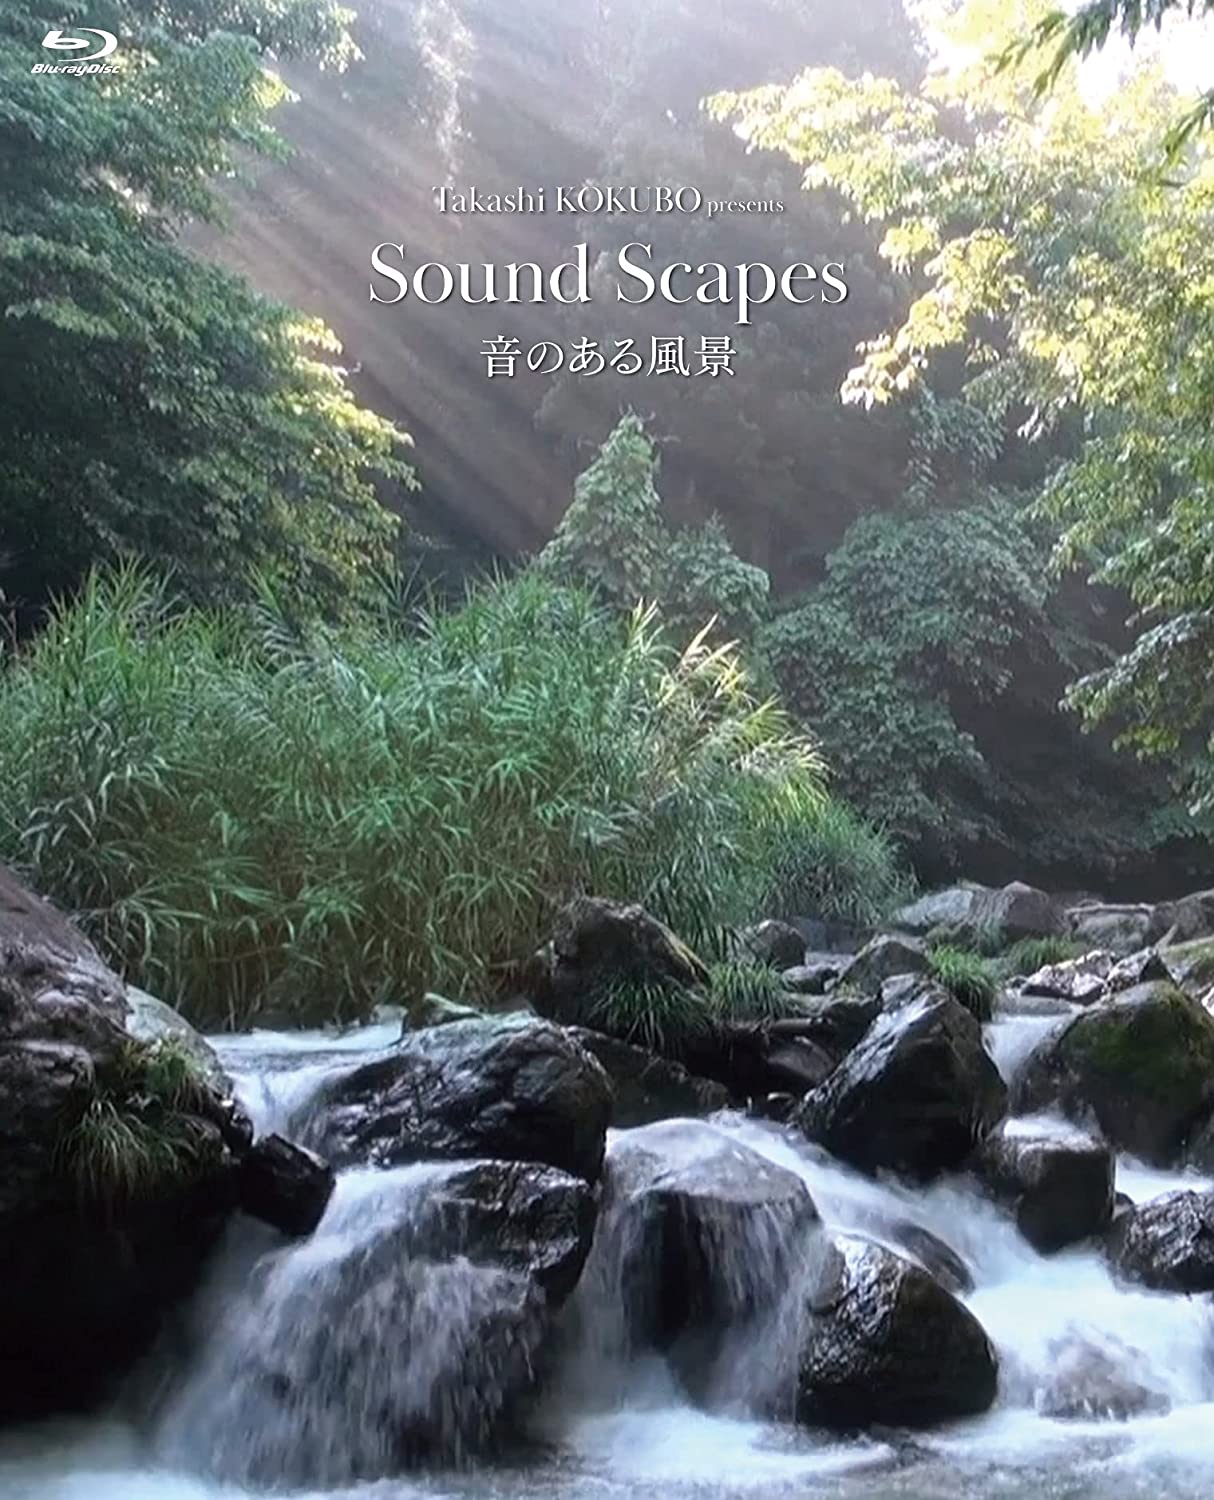 Takashi kokubo presents　SOUND SCAPES 音のある風景